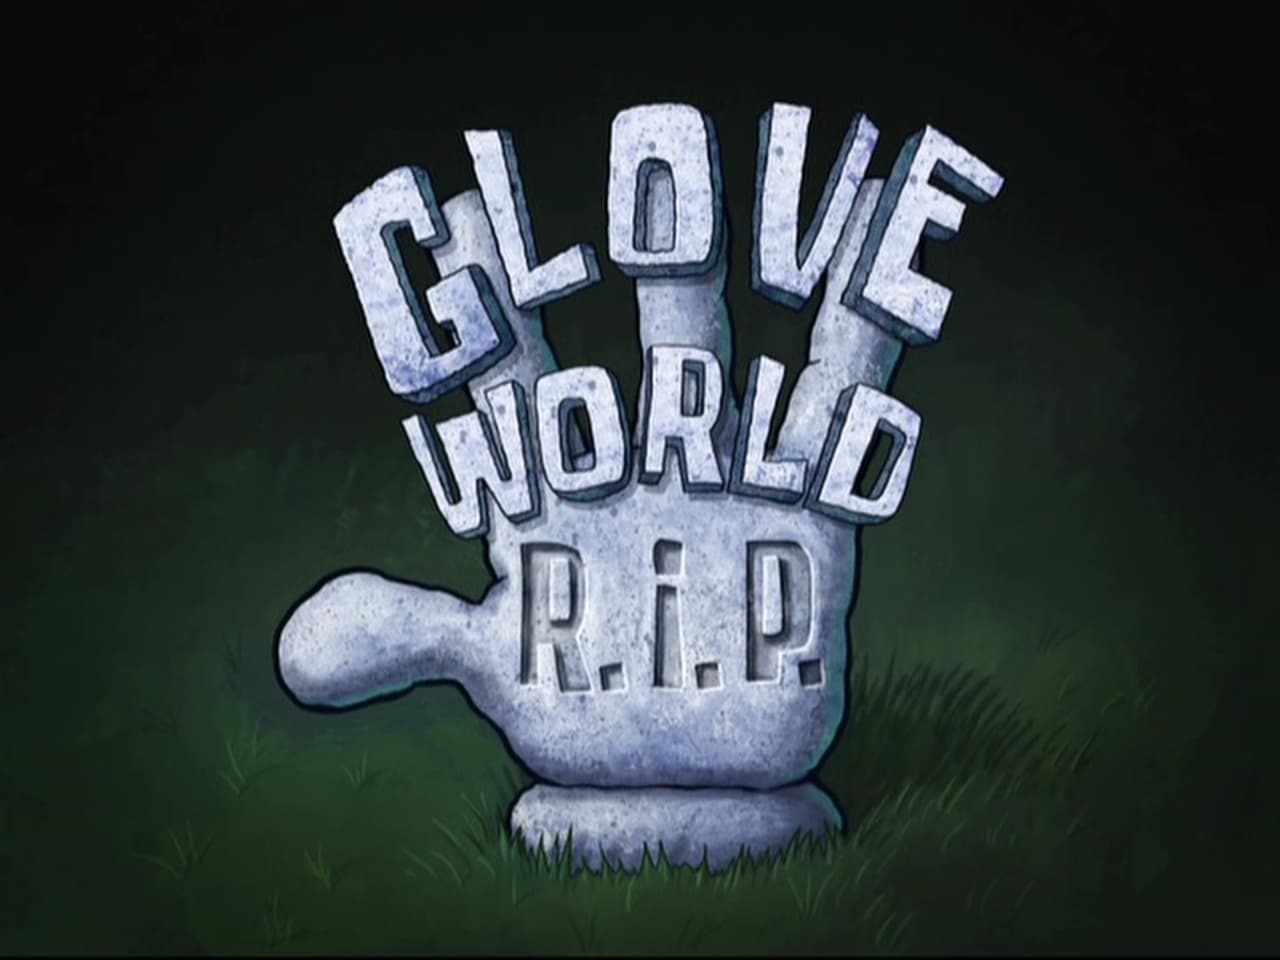 SpongeBob SquarePants - Season 8 Episode 32 : Glove World R.I.P.